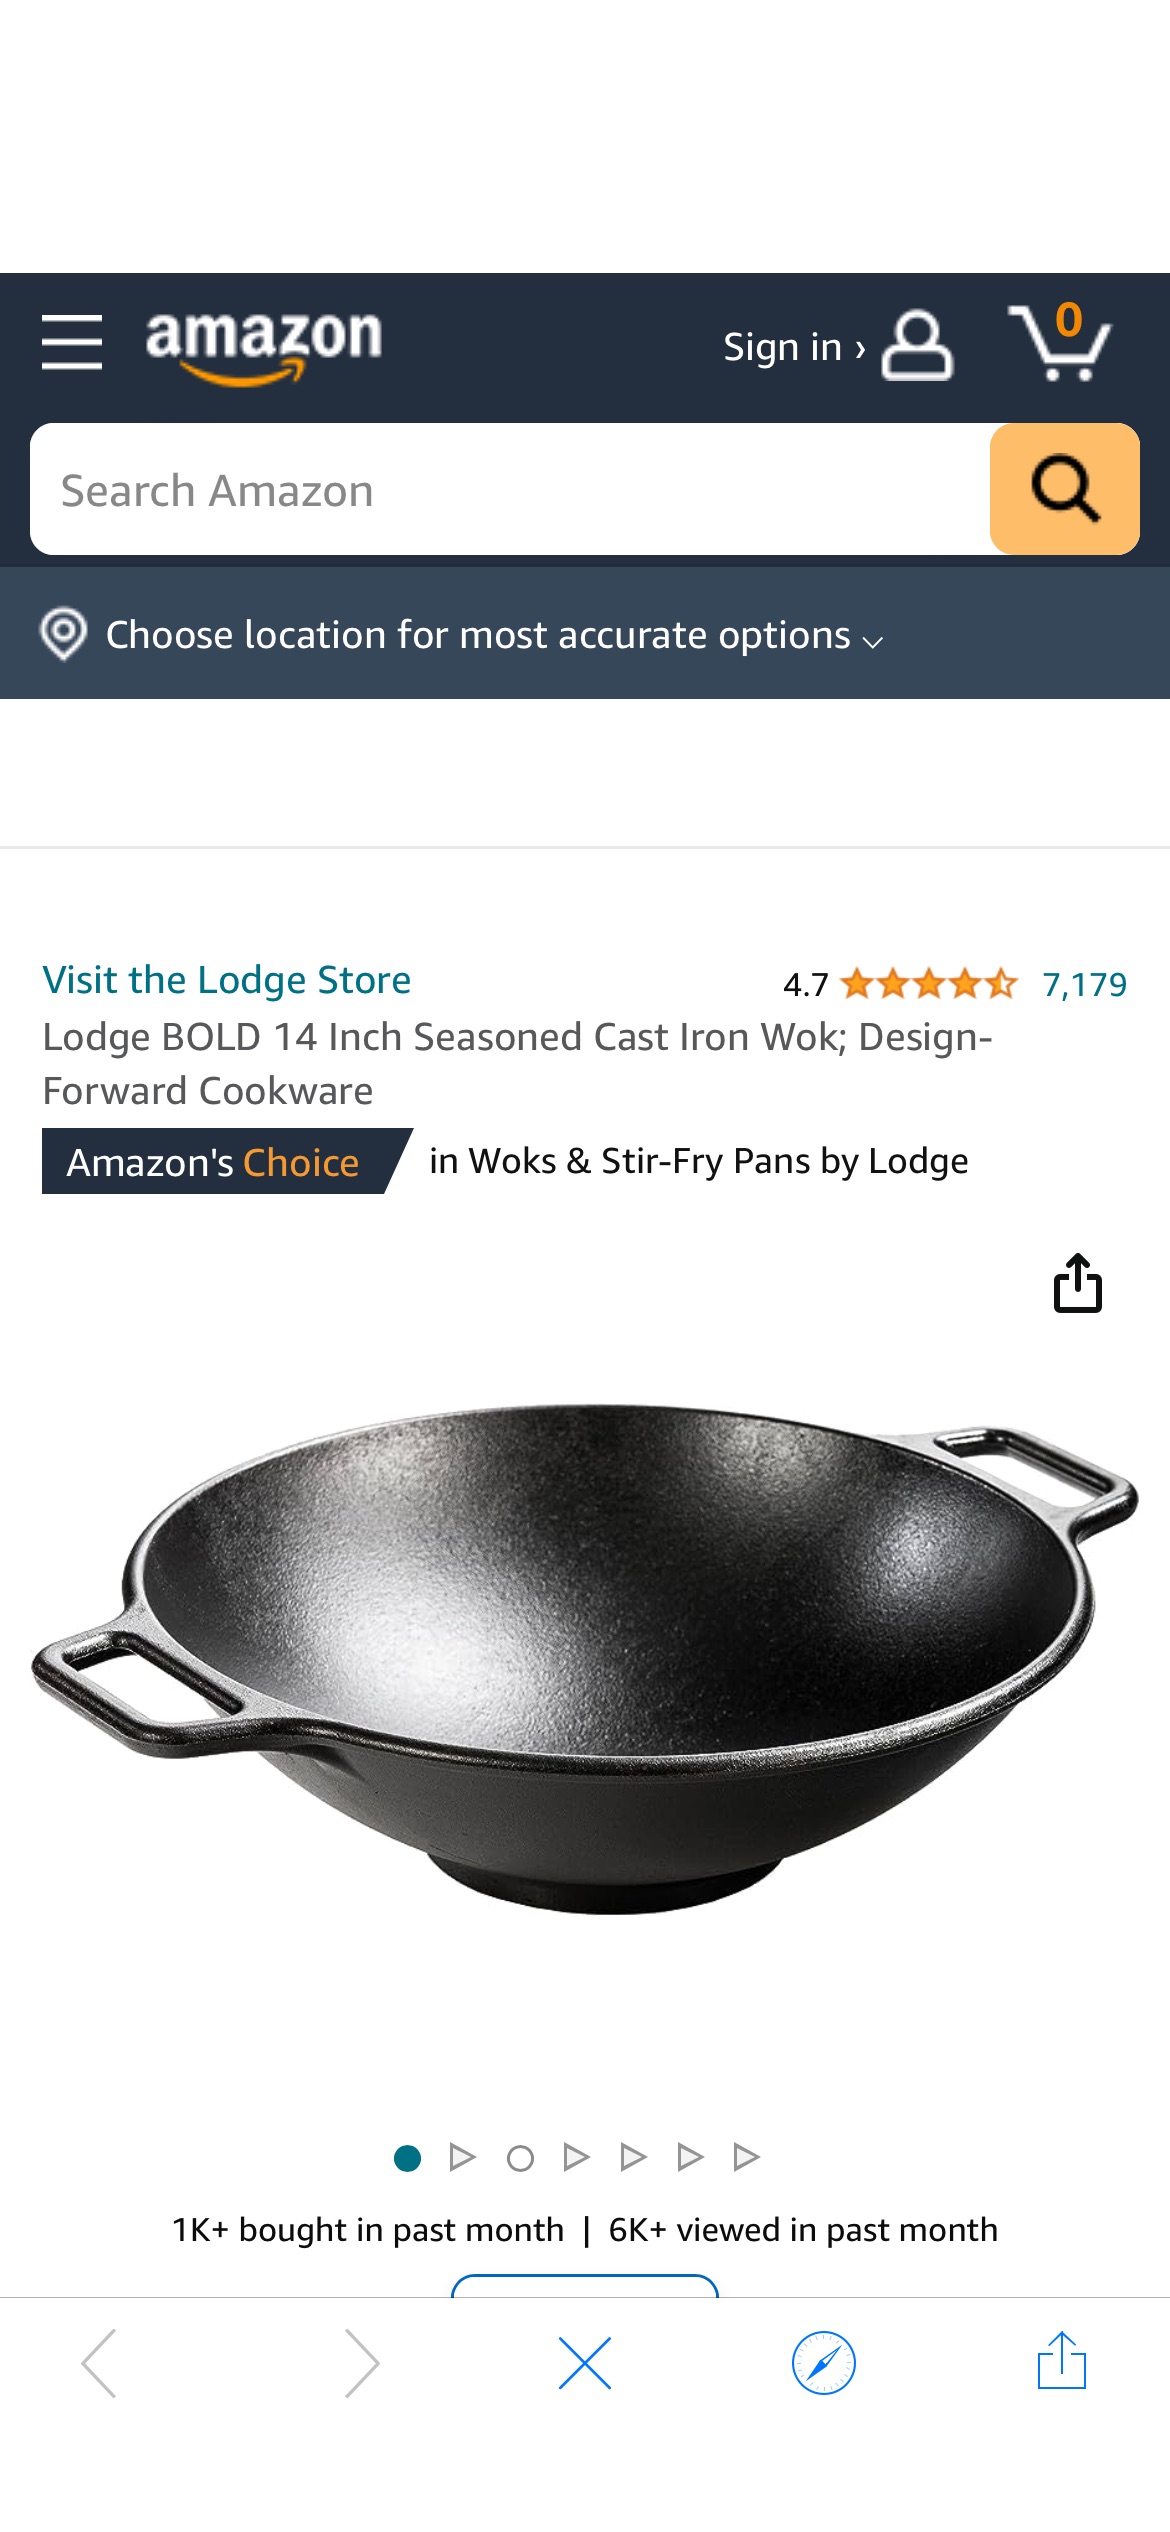 Amazon.com: Lodge BOLD 14 Inch Seasoned Cast Iron Wok; Design-Forward Cookware: Home & Kitchen